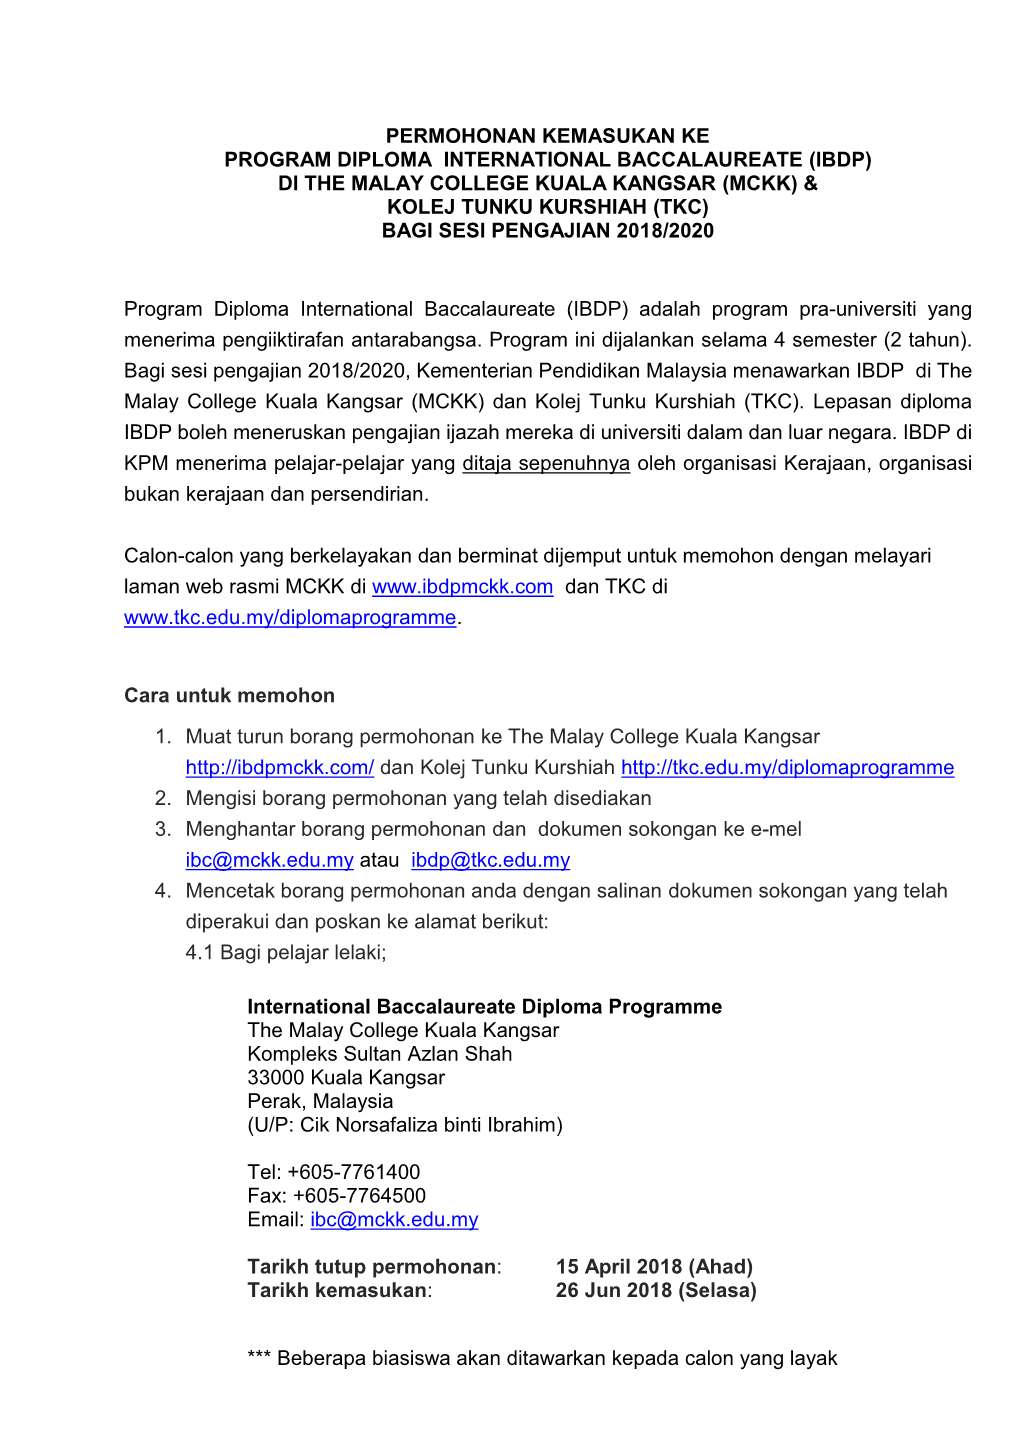 (Ibdp) Di the Malay College Kuala Kangsar (Mckk) & Kolej Tunku Kurshiah (Tkc) Bagi Sesi Pengajian 2018/2020